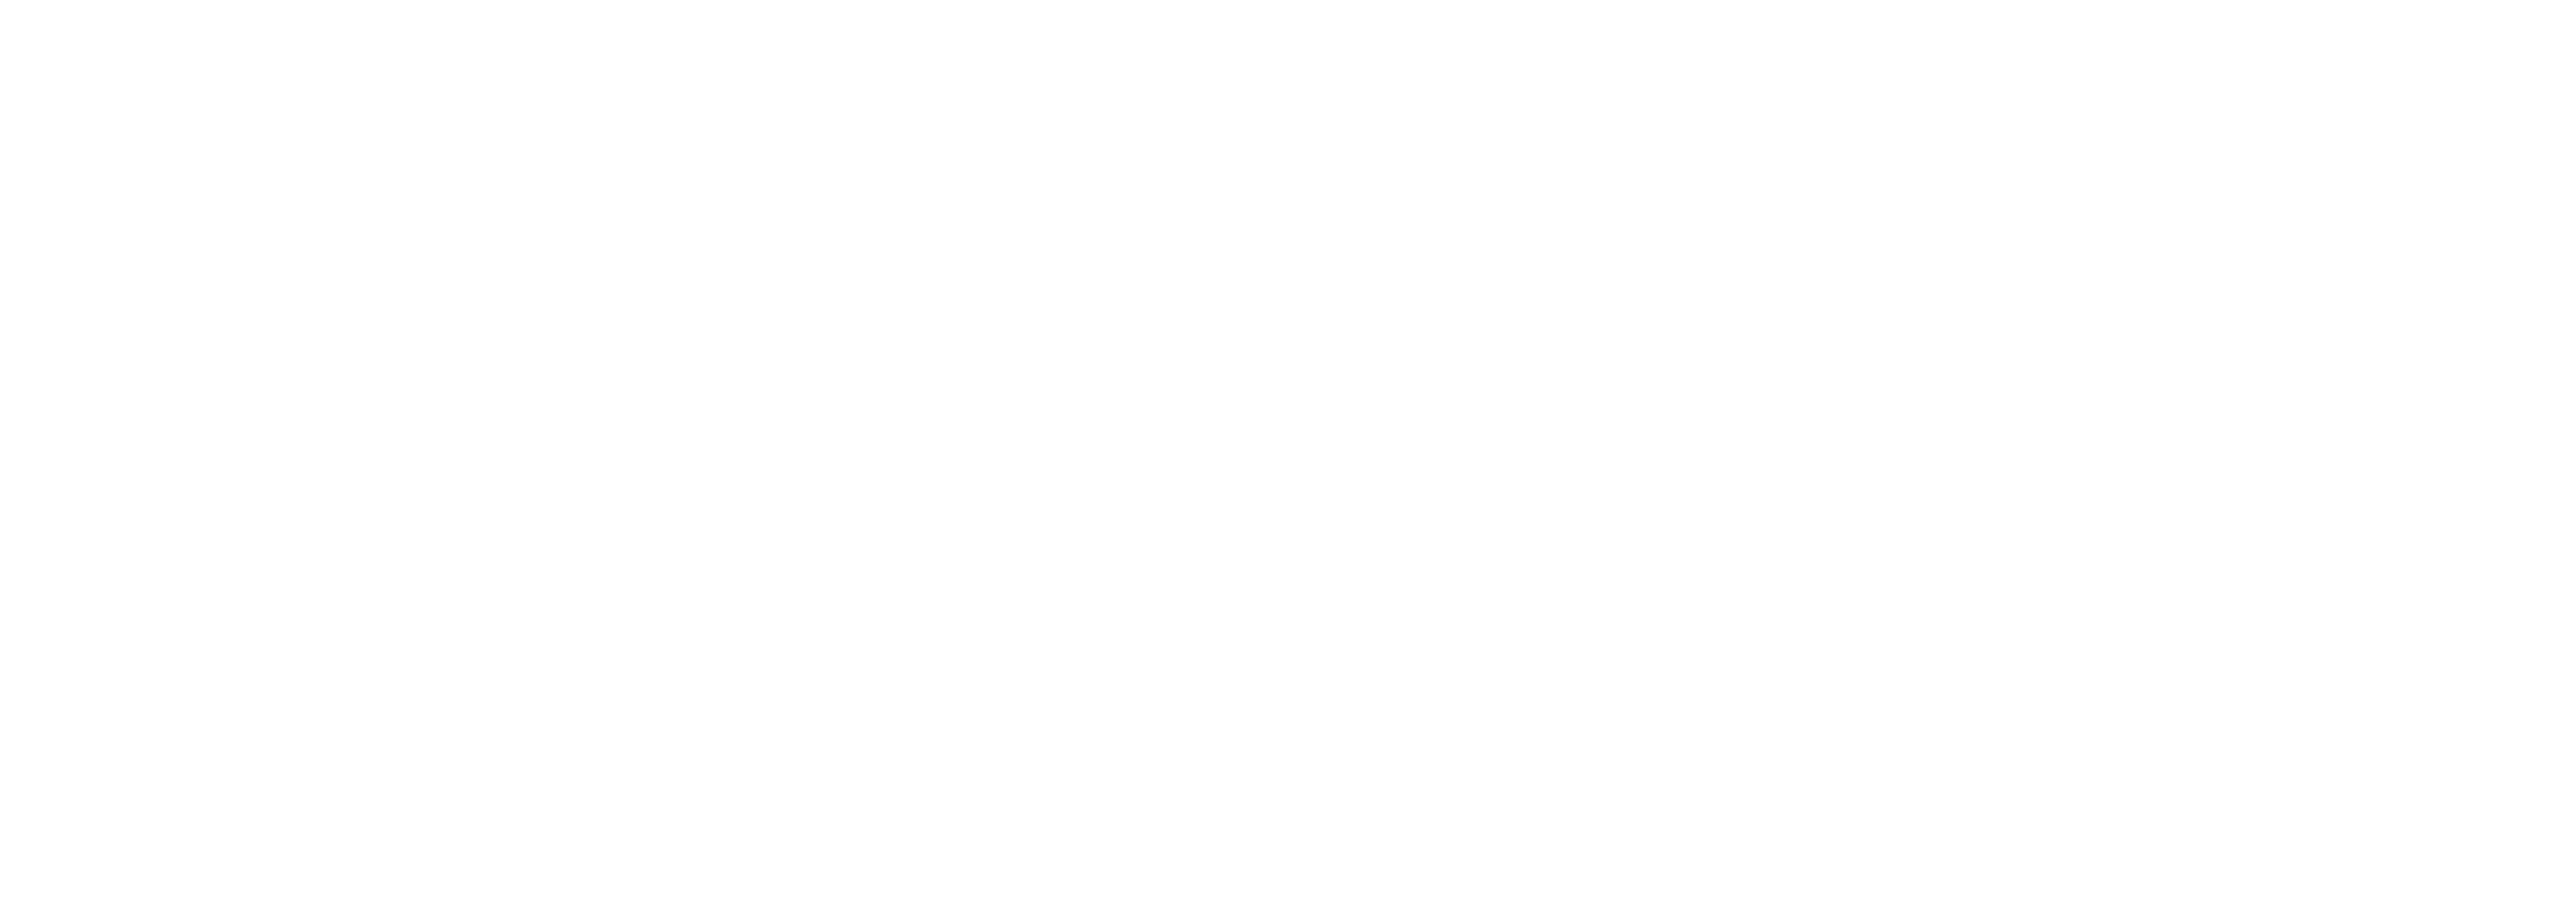 Arkansas Academic Advising Network